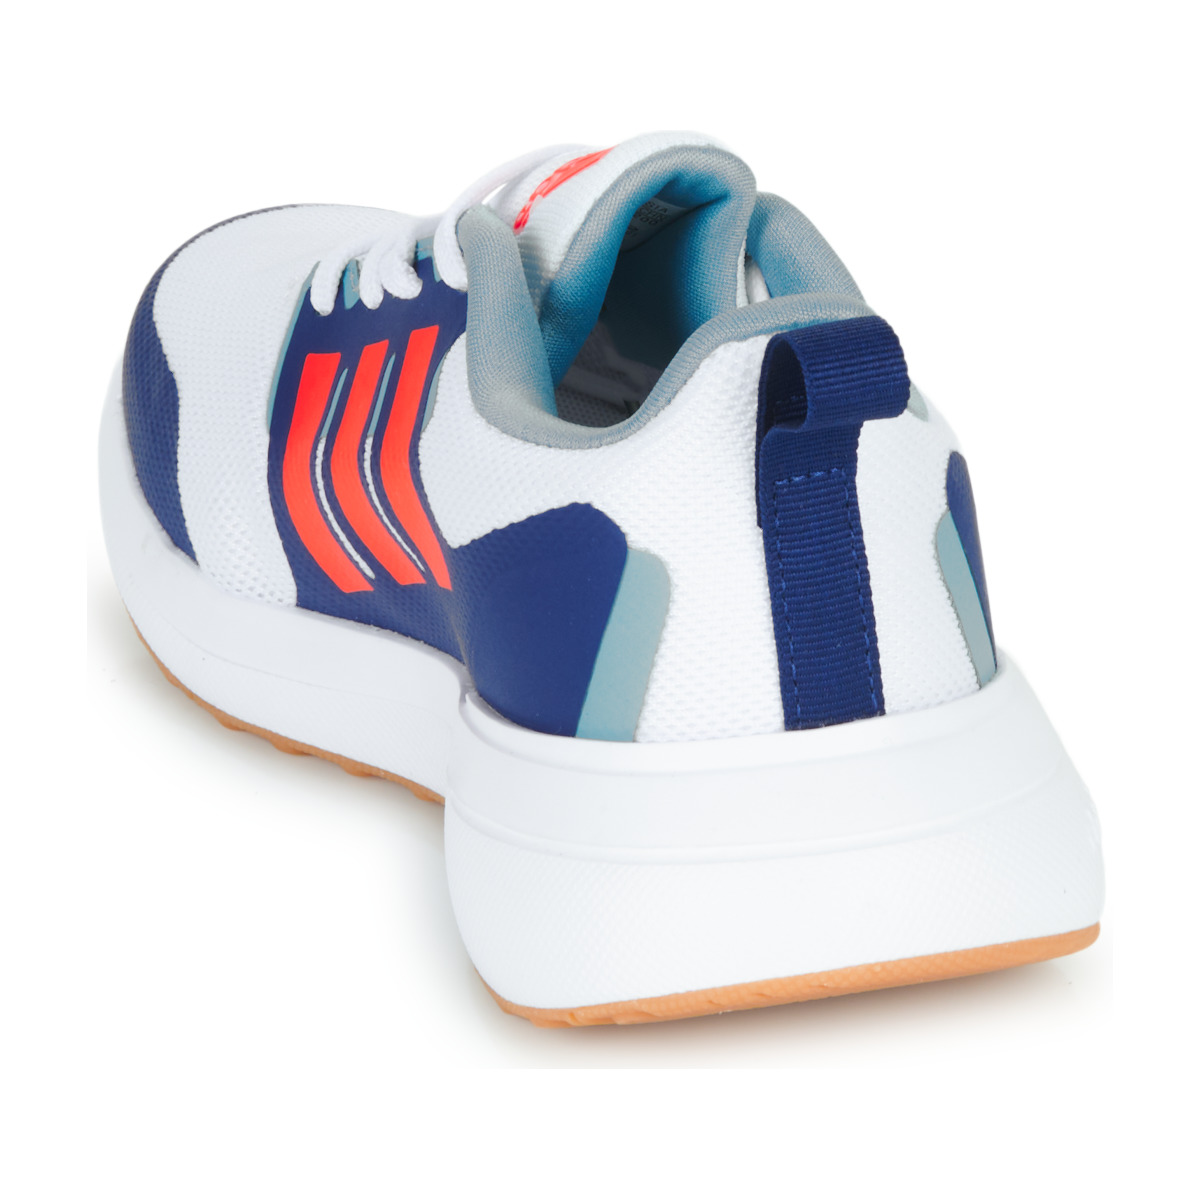 Adidas Sportswear Blanc / Bleu / Rouge FortaRun 2.0 K bGxmPwbR